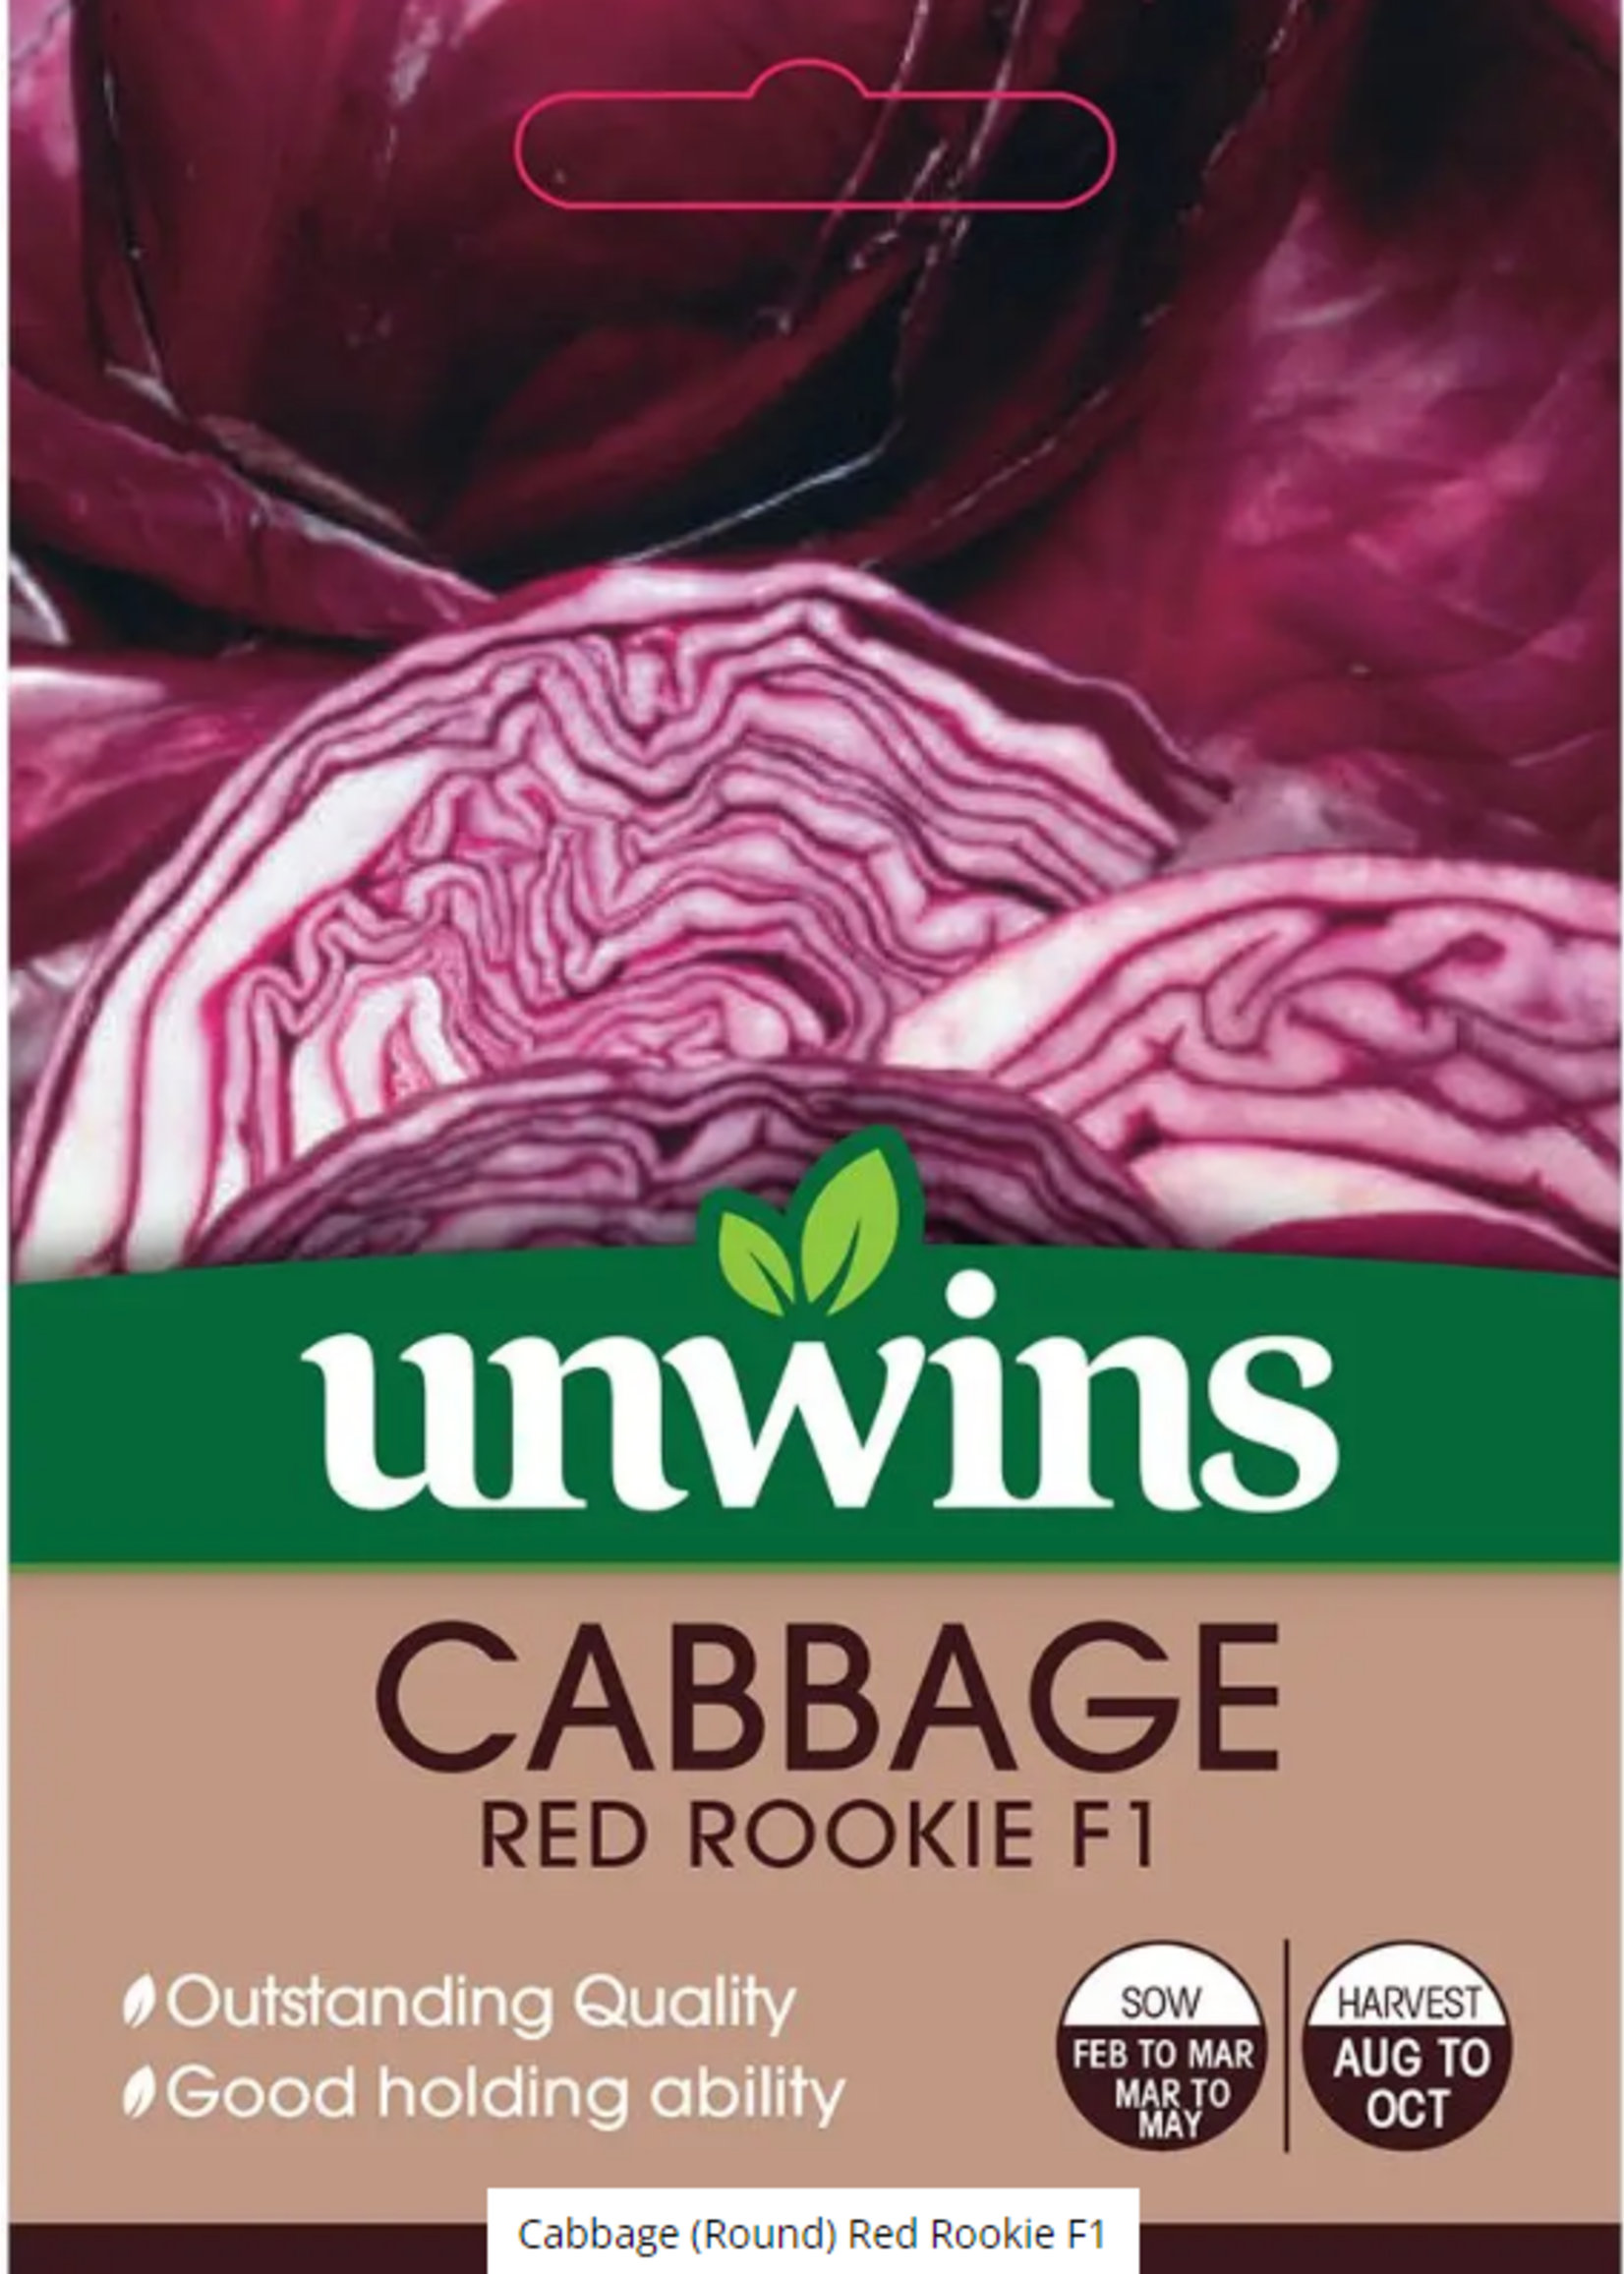 Unwins Cabbage - Red Rookie